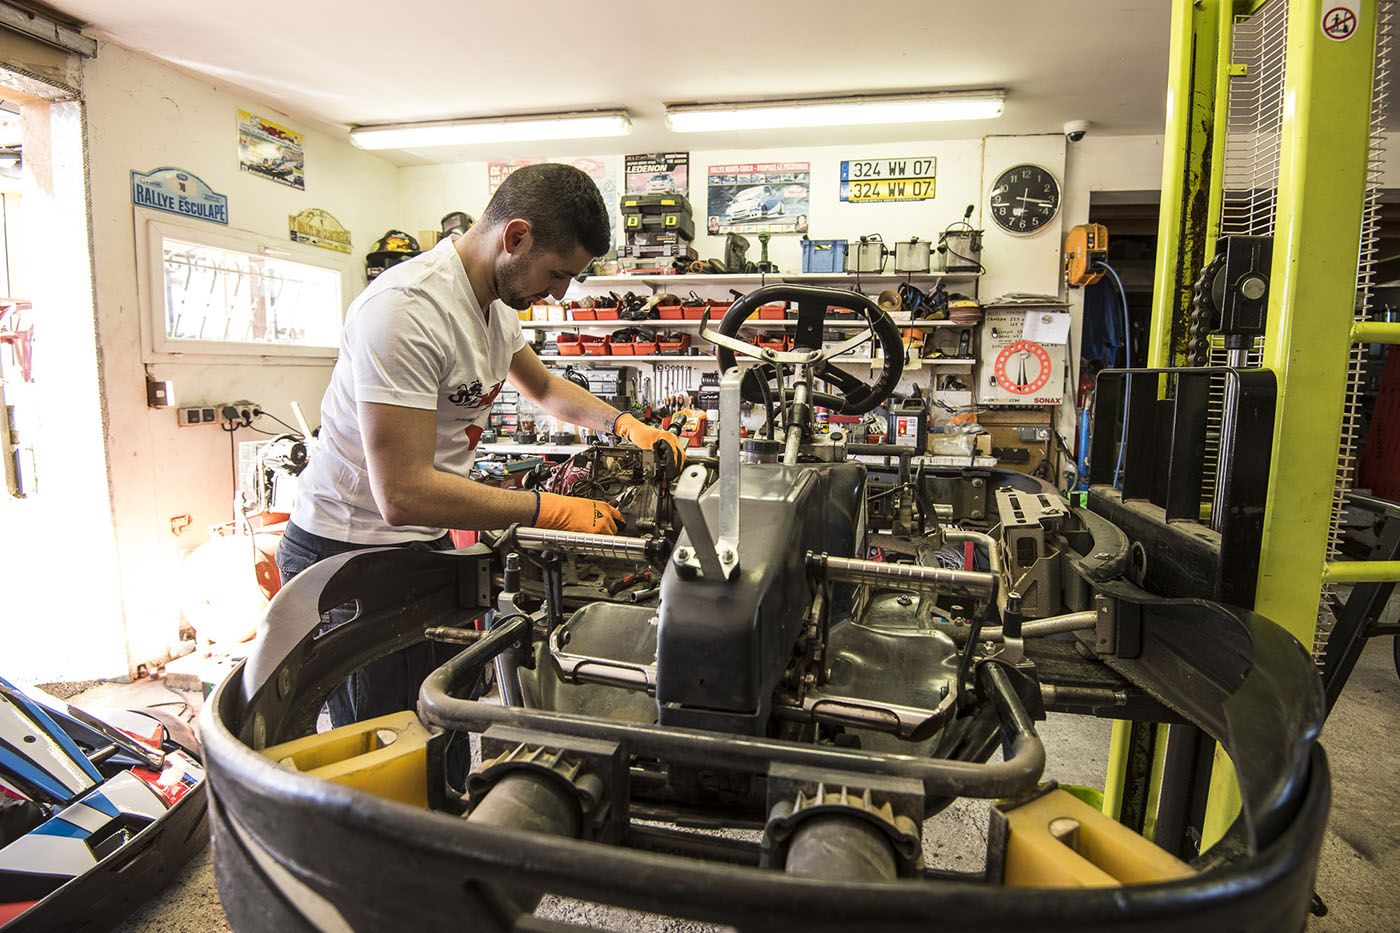 Karting Aubenas - The mechanical workshop